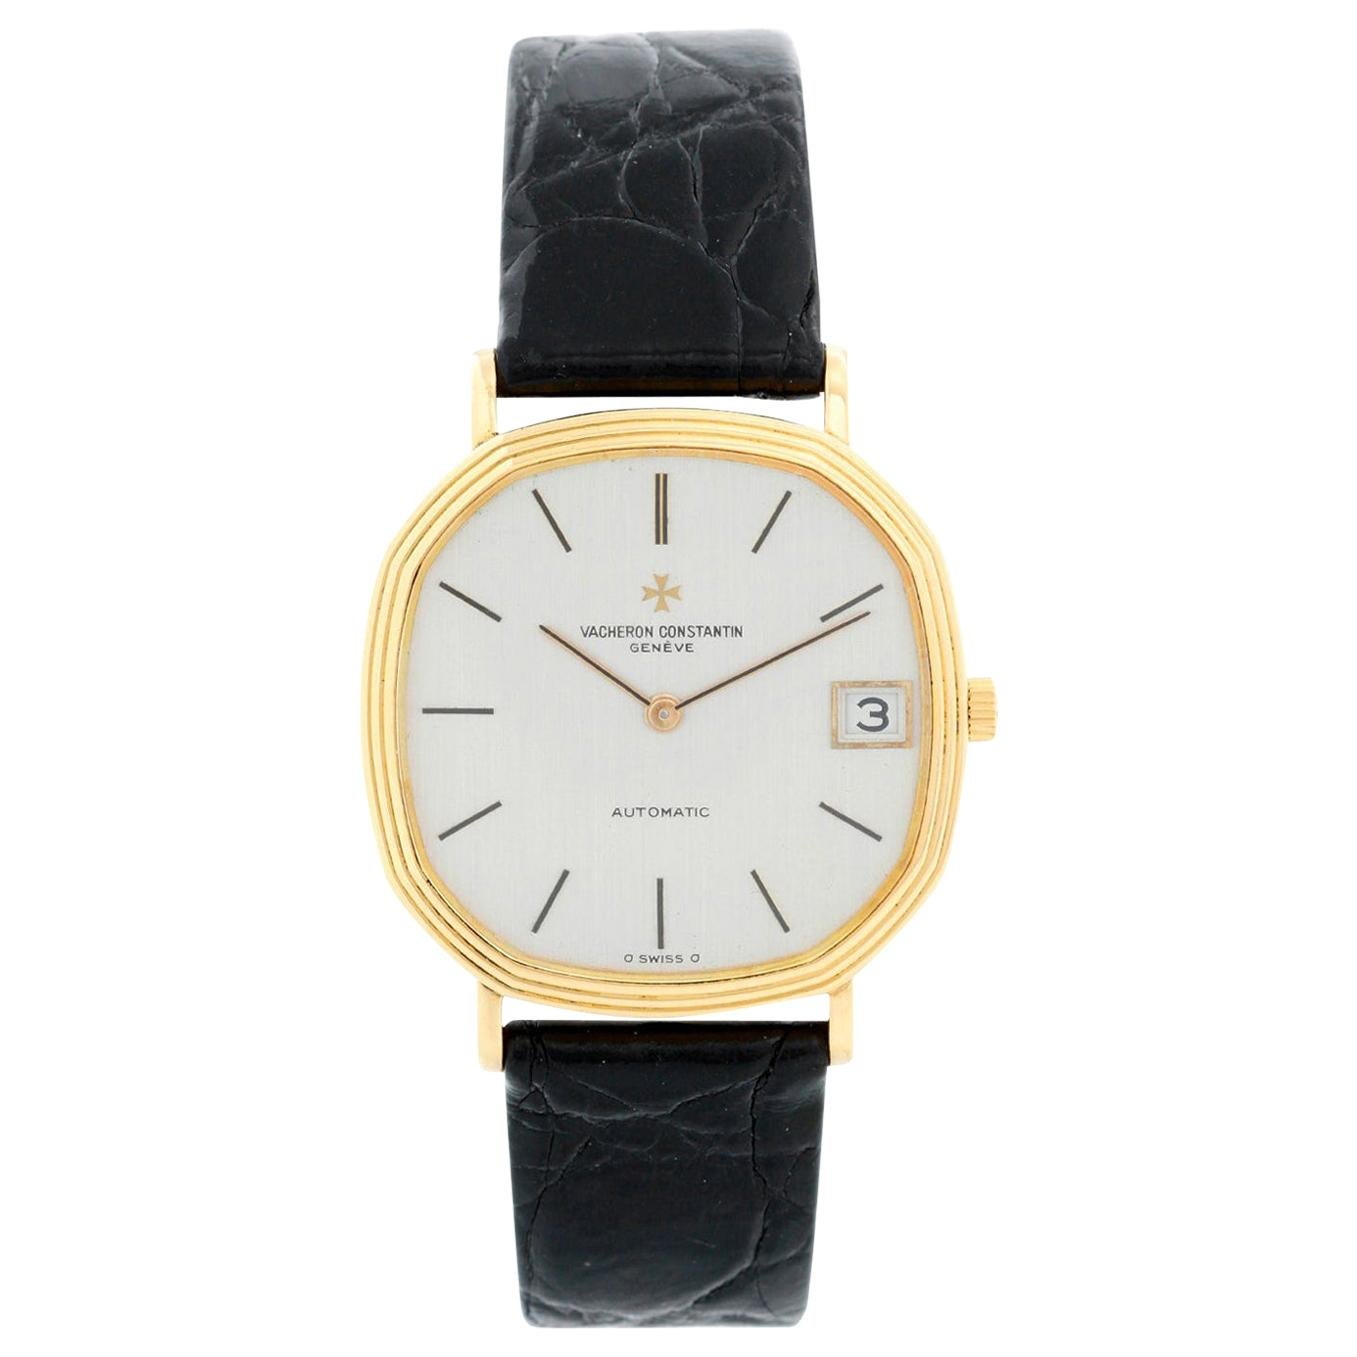 Vacheron Constantin 18 Karat Yellow Gold Vintage Men's Automatic Watch